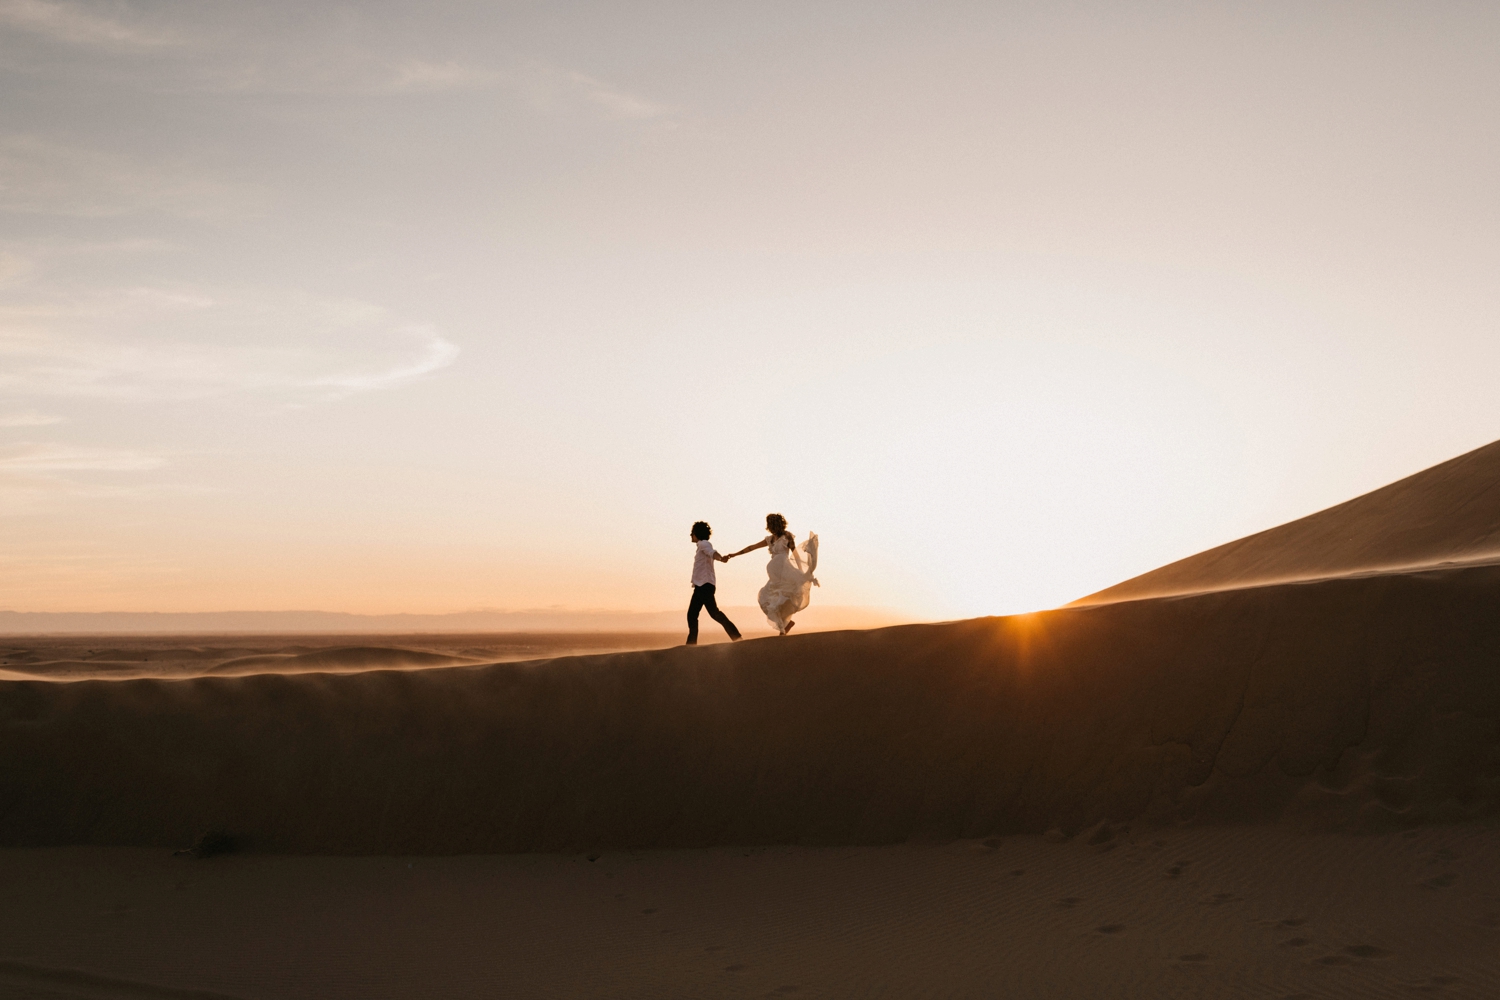 couple at sunset in Morocco desert 